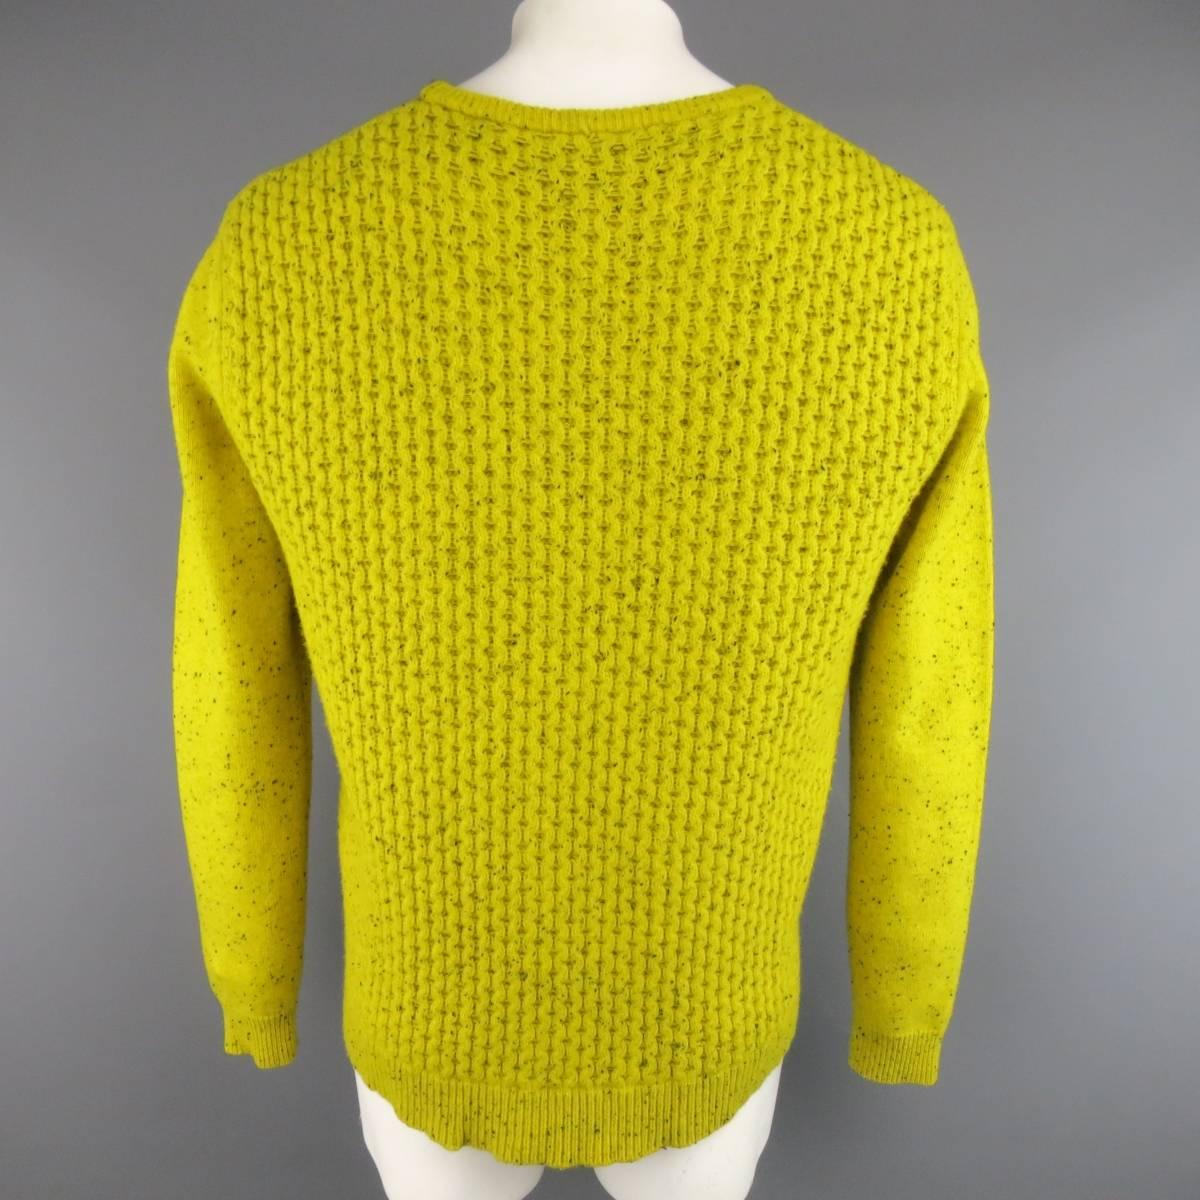 RAF SIMONS XL Chartreuse Yellow & Black Speckled Merino Wool Crewneck Sweater 2